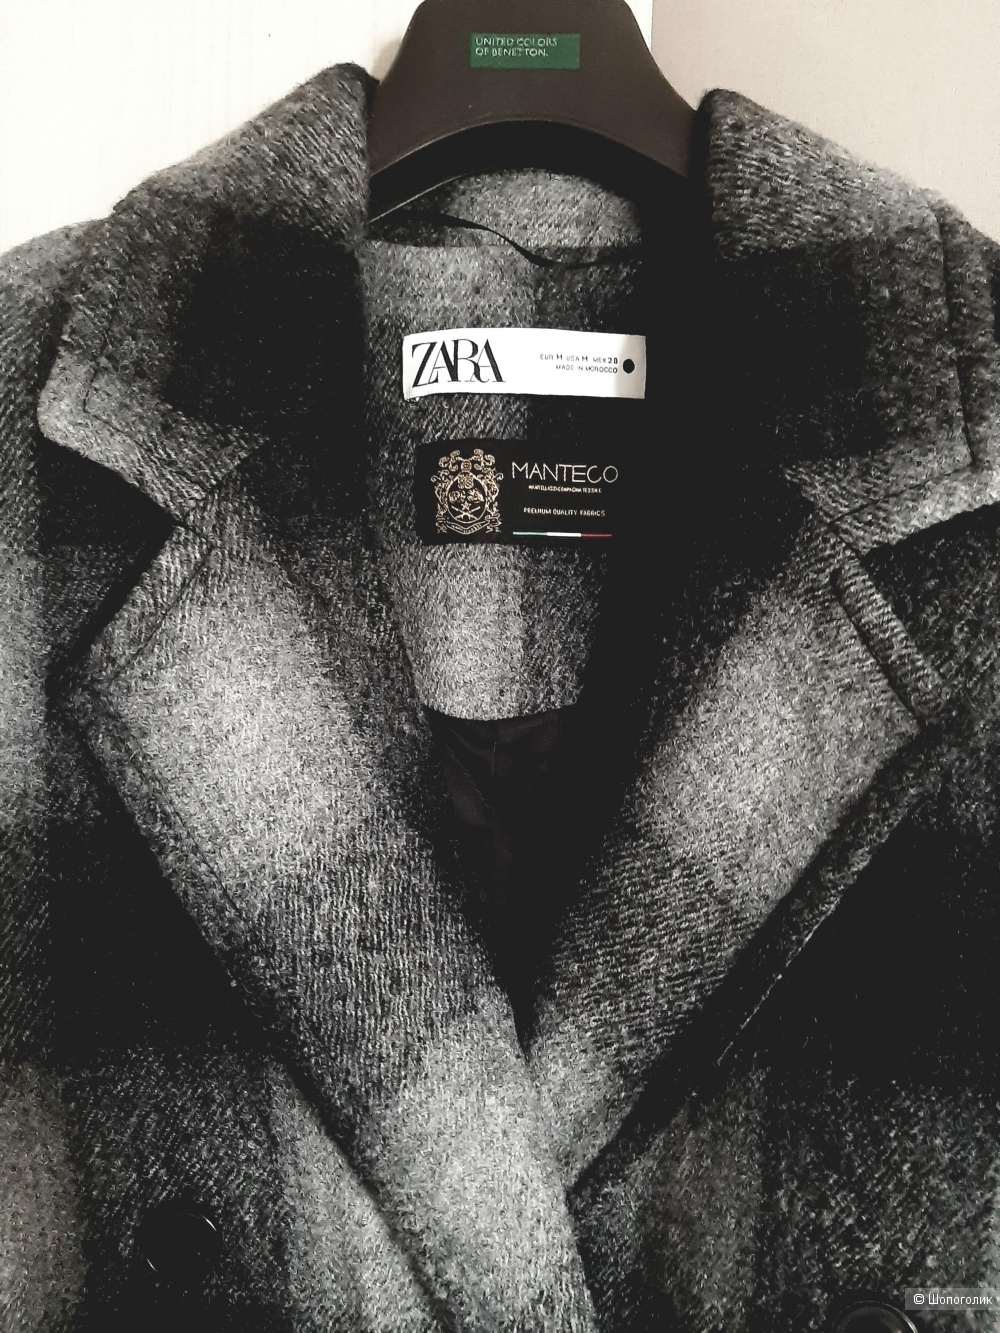 Пальто шерстяное ZARA Manteco wool , размер М